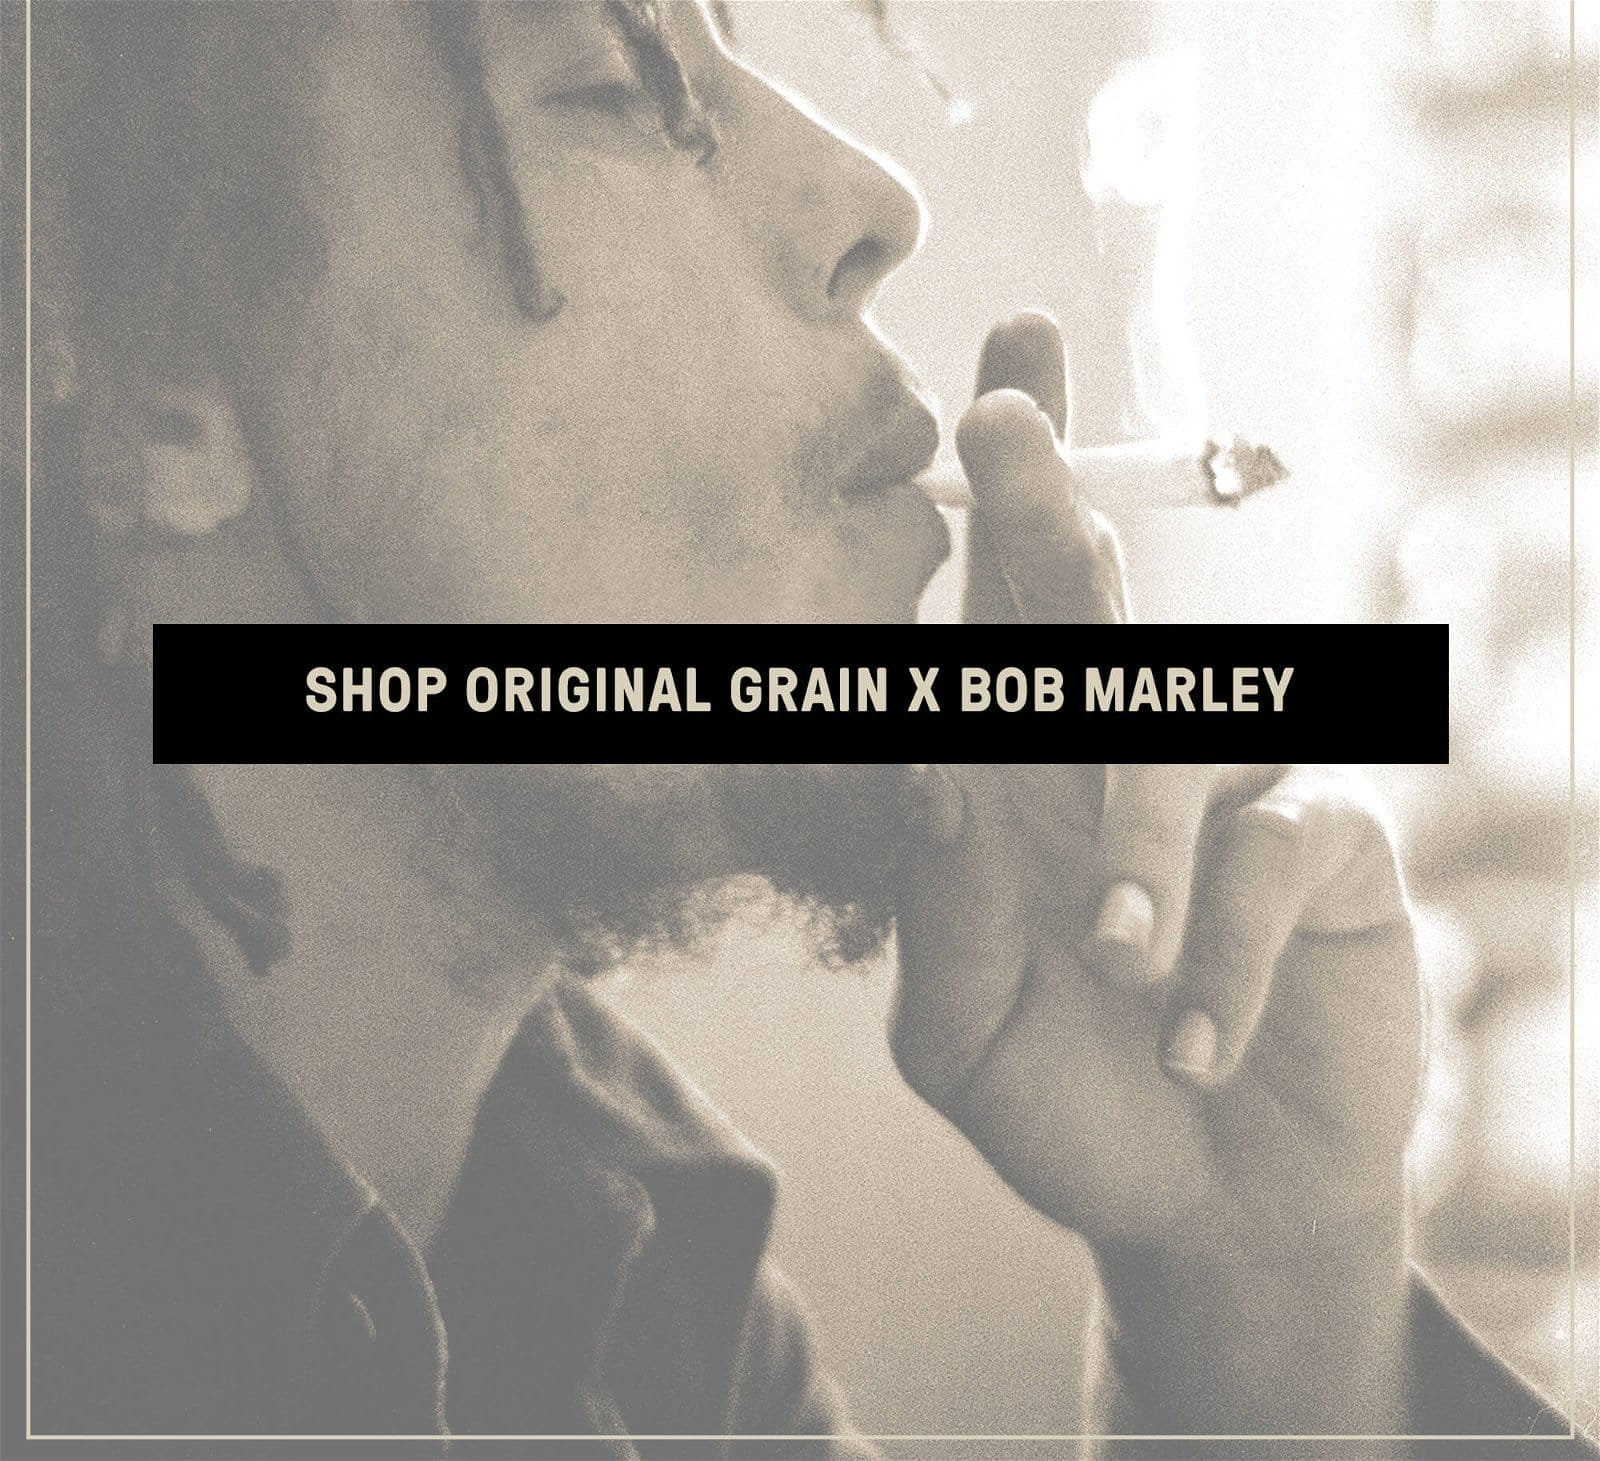 Click here to shop Original Grain x Bob Marley Hemp Collection